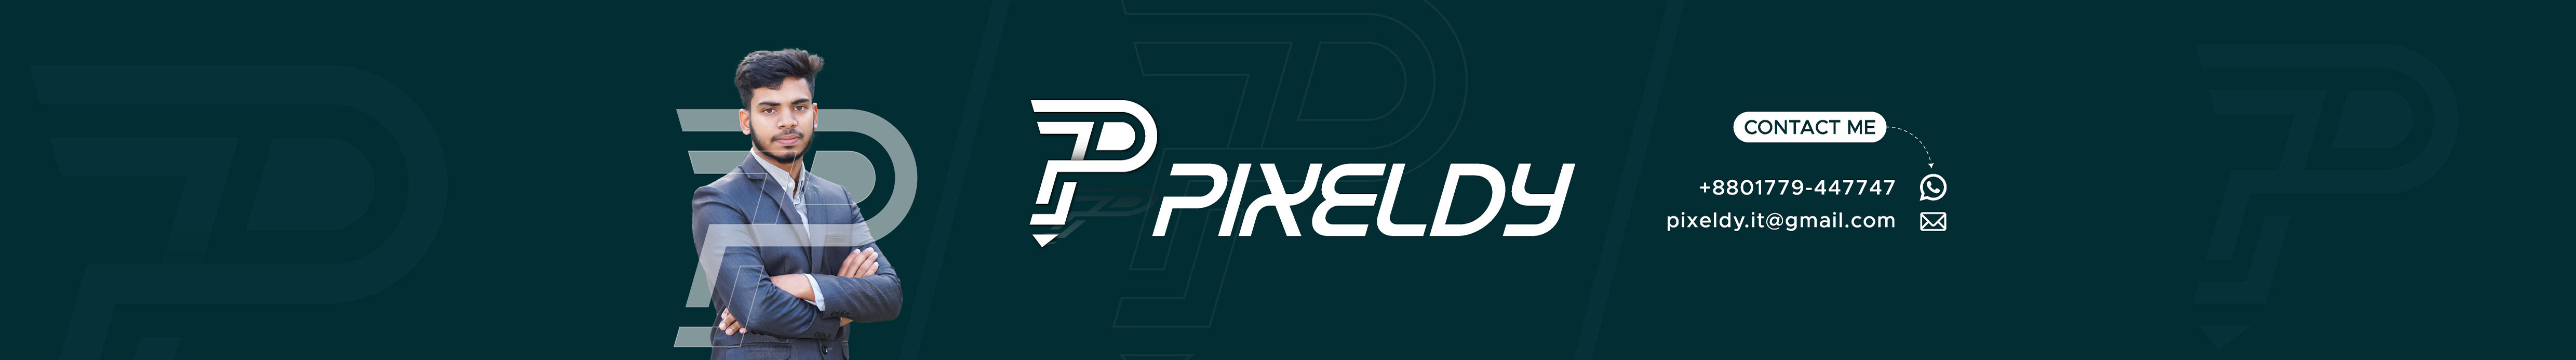 PIXEL DY のプロファイルバナー